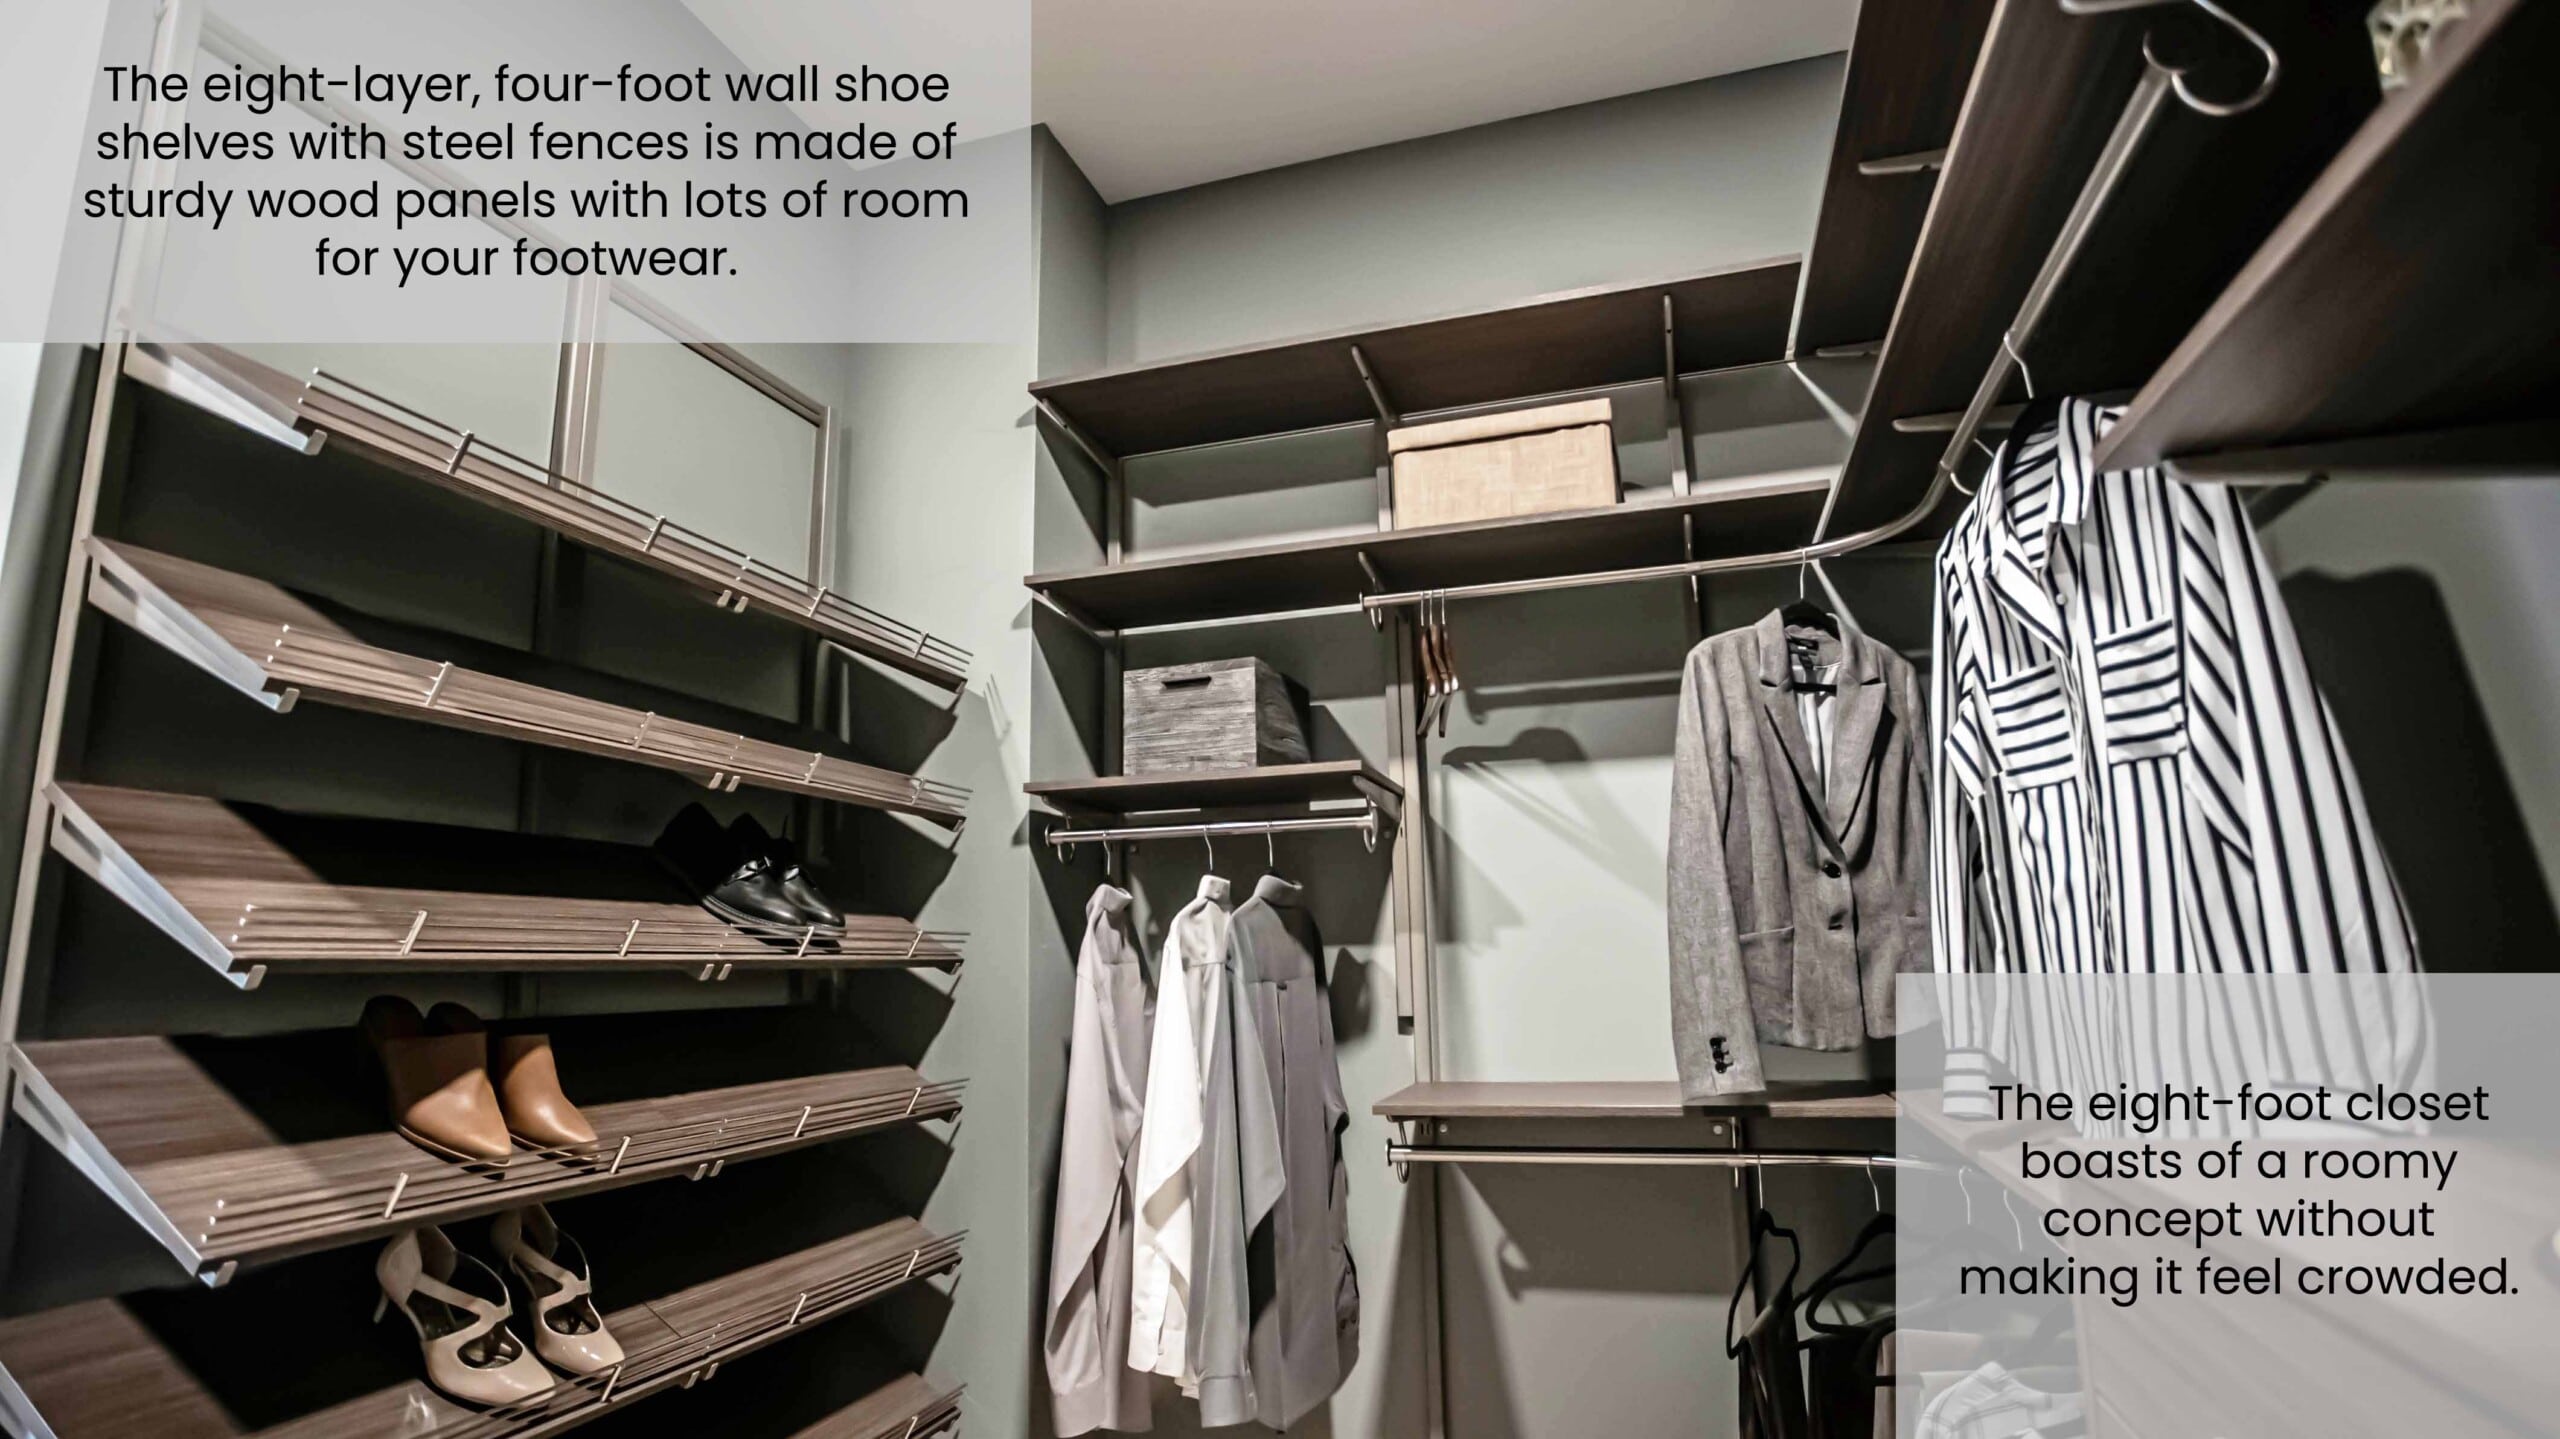 https://closetslasvegas.com/wp-content/uploads/2021/08/website-wooden-shoe-shelves-for-a-his-and-her-walk-in-closet-design-idea-scaled.jpg